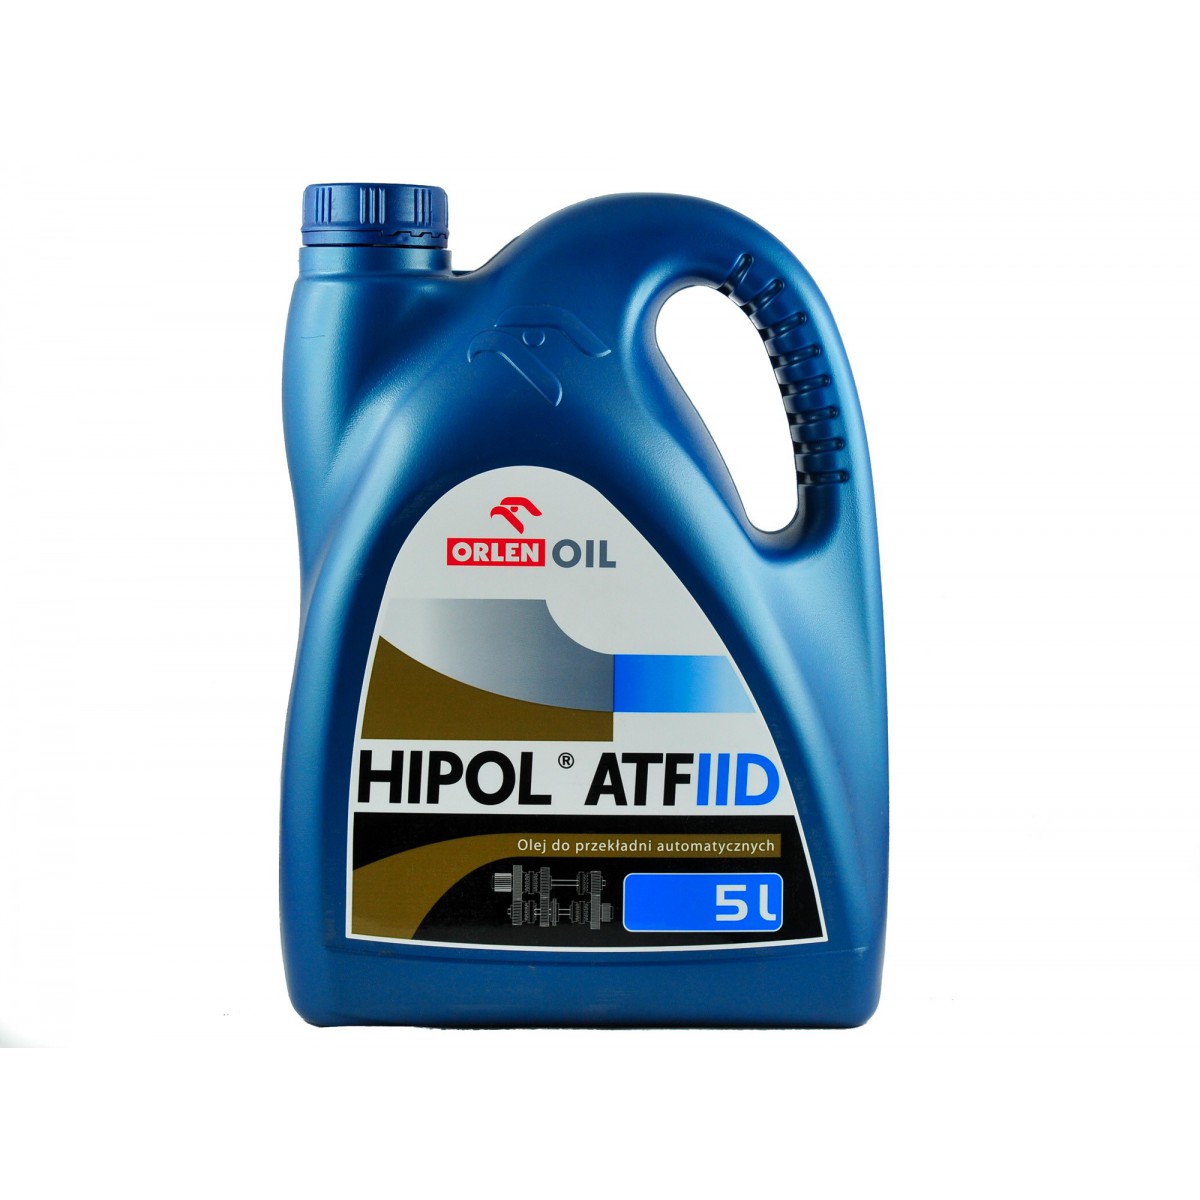 HIPOL ATF II D hydraulic-gear oil for automatic transmissions